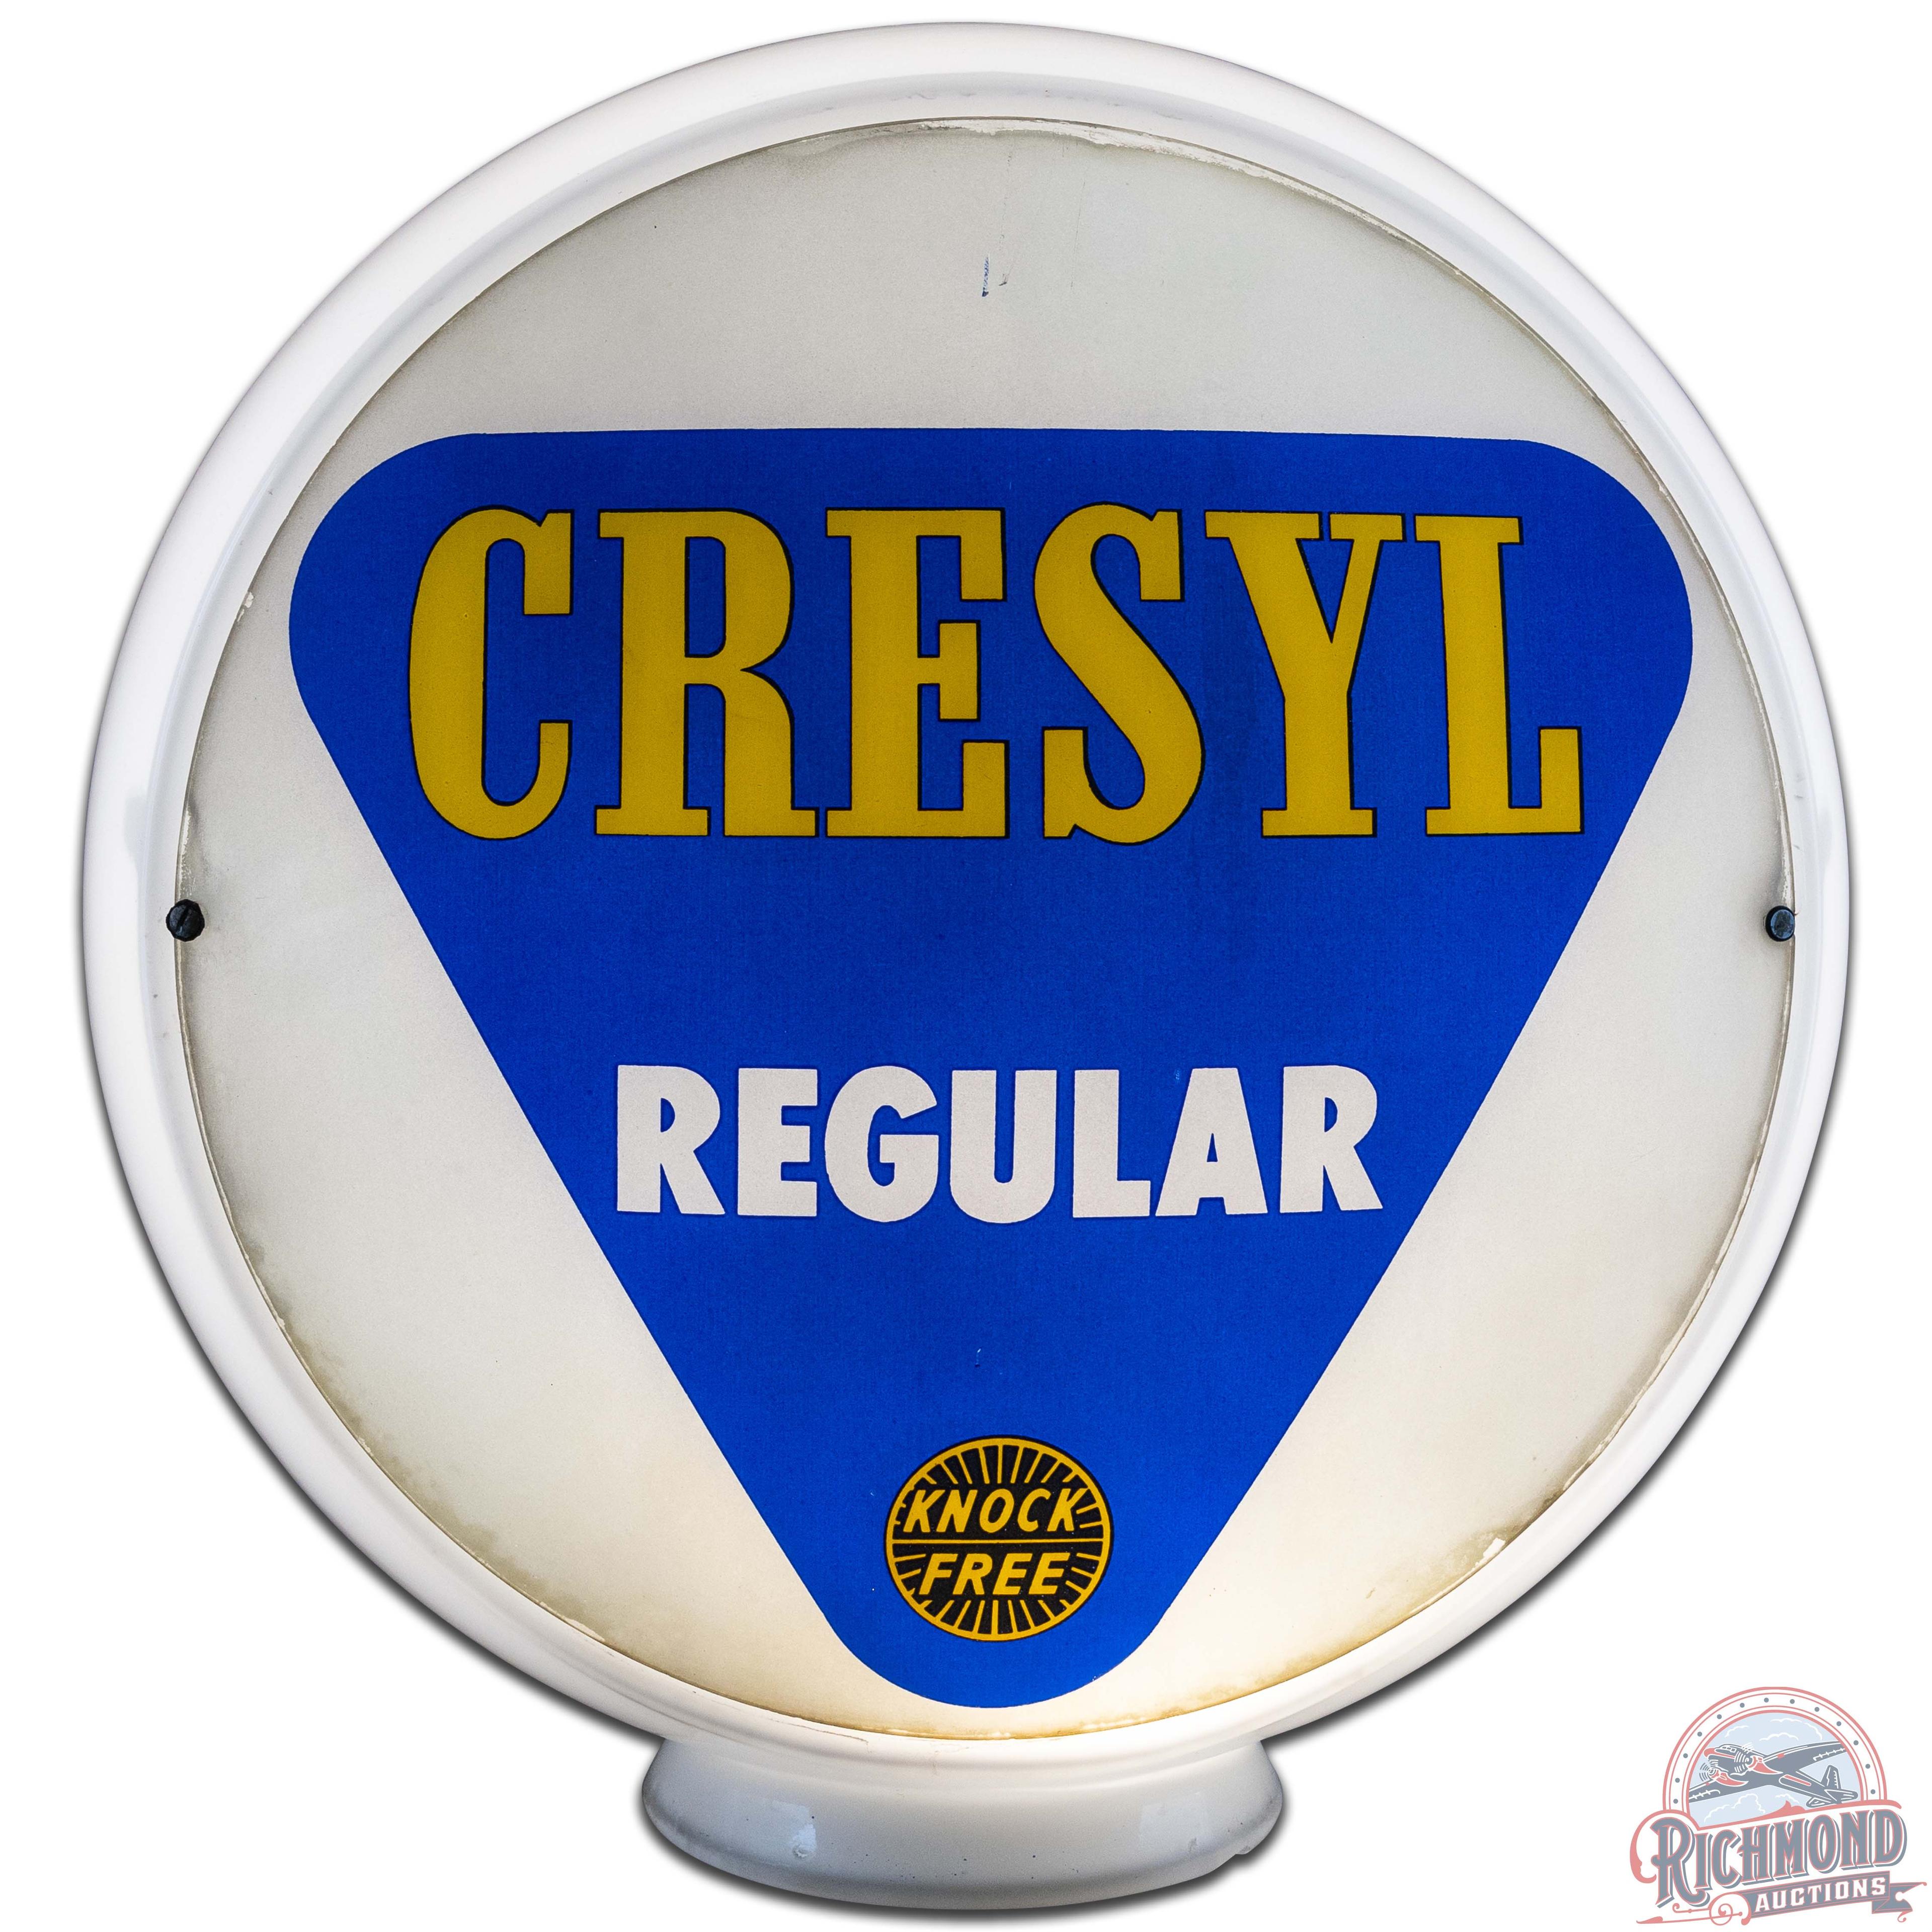 Cresyl Regular Gasoline 13.5" Gas Pump Globe Complete